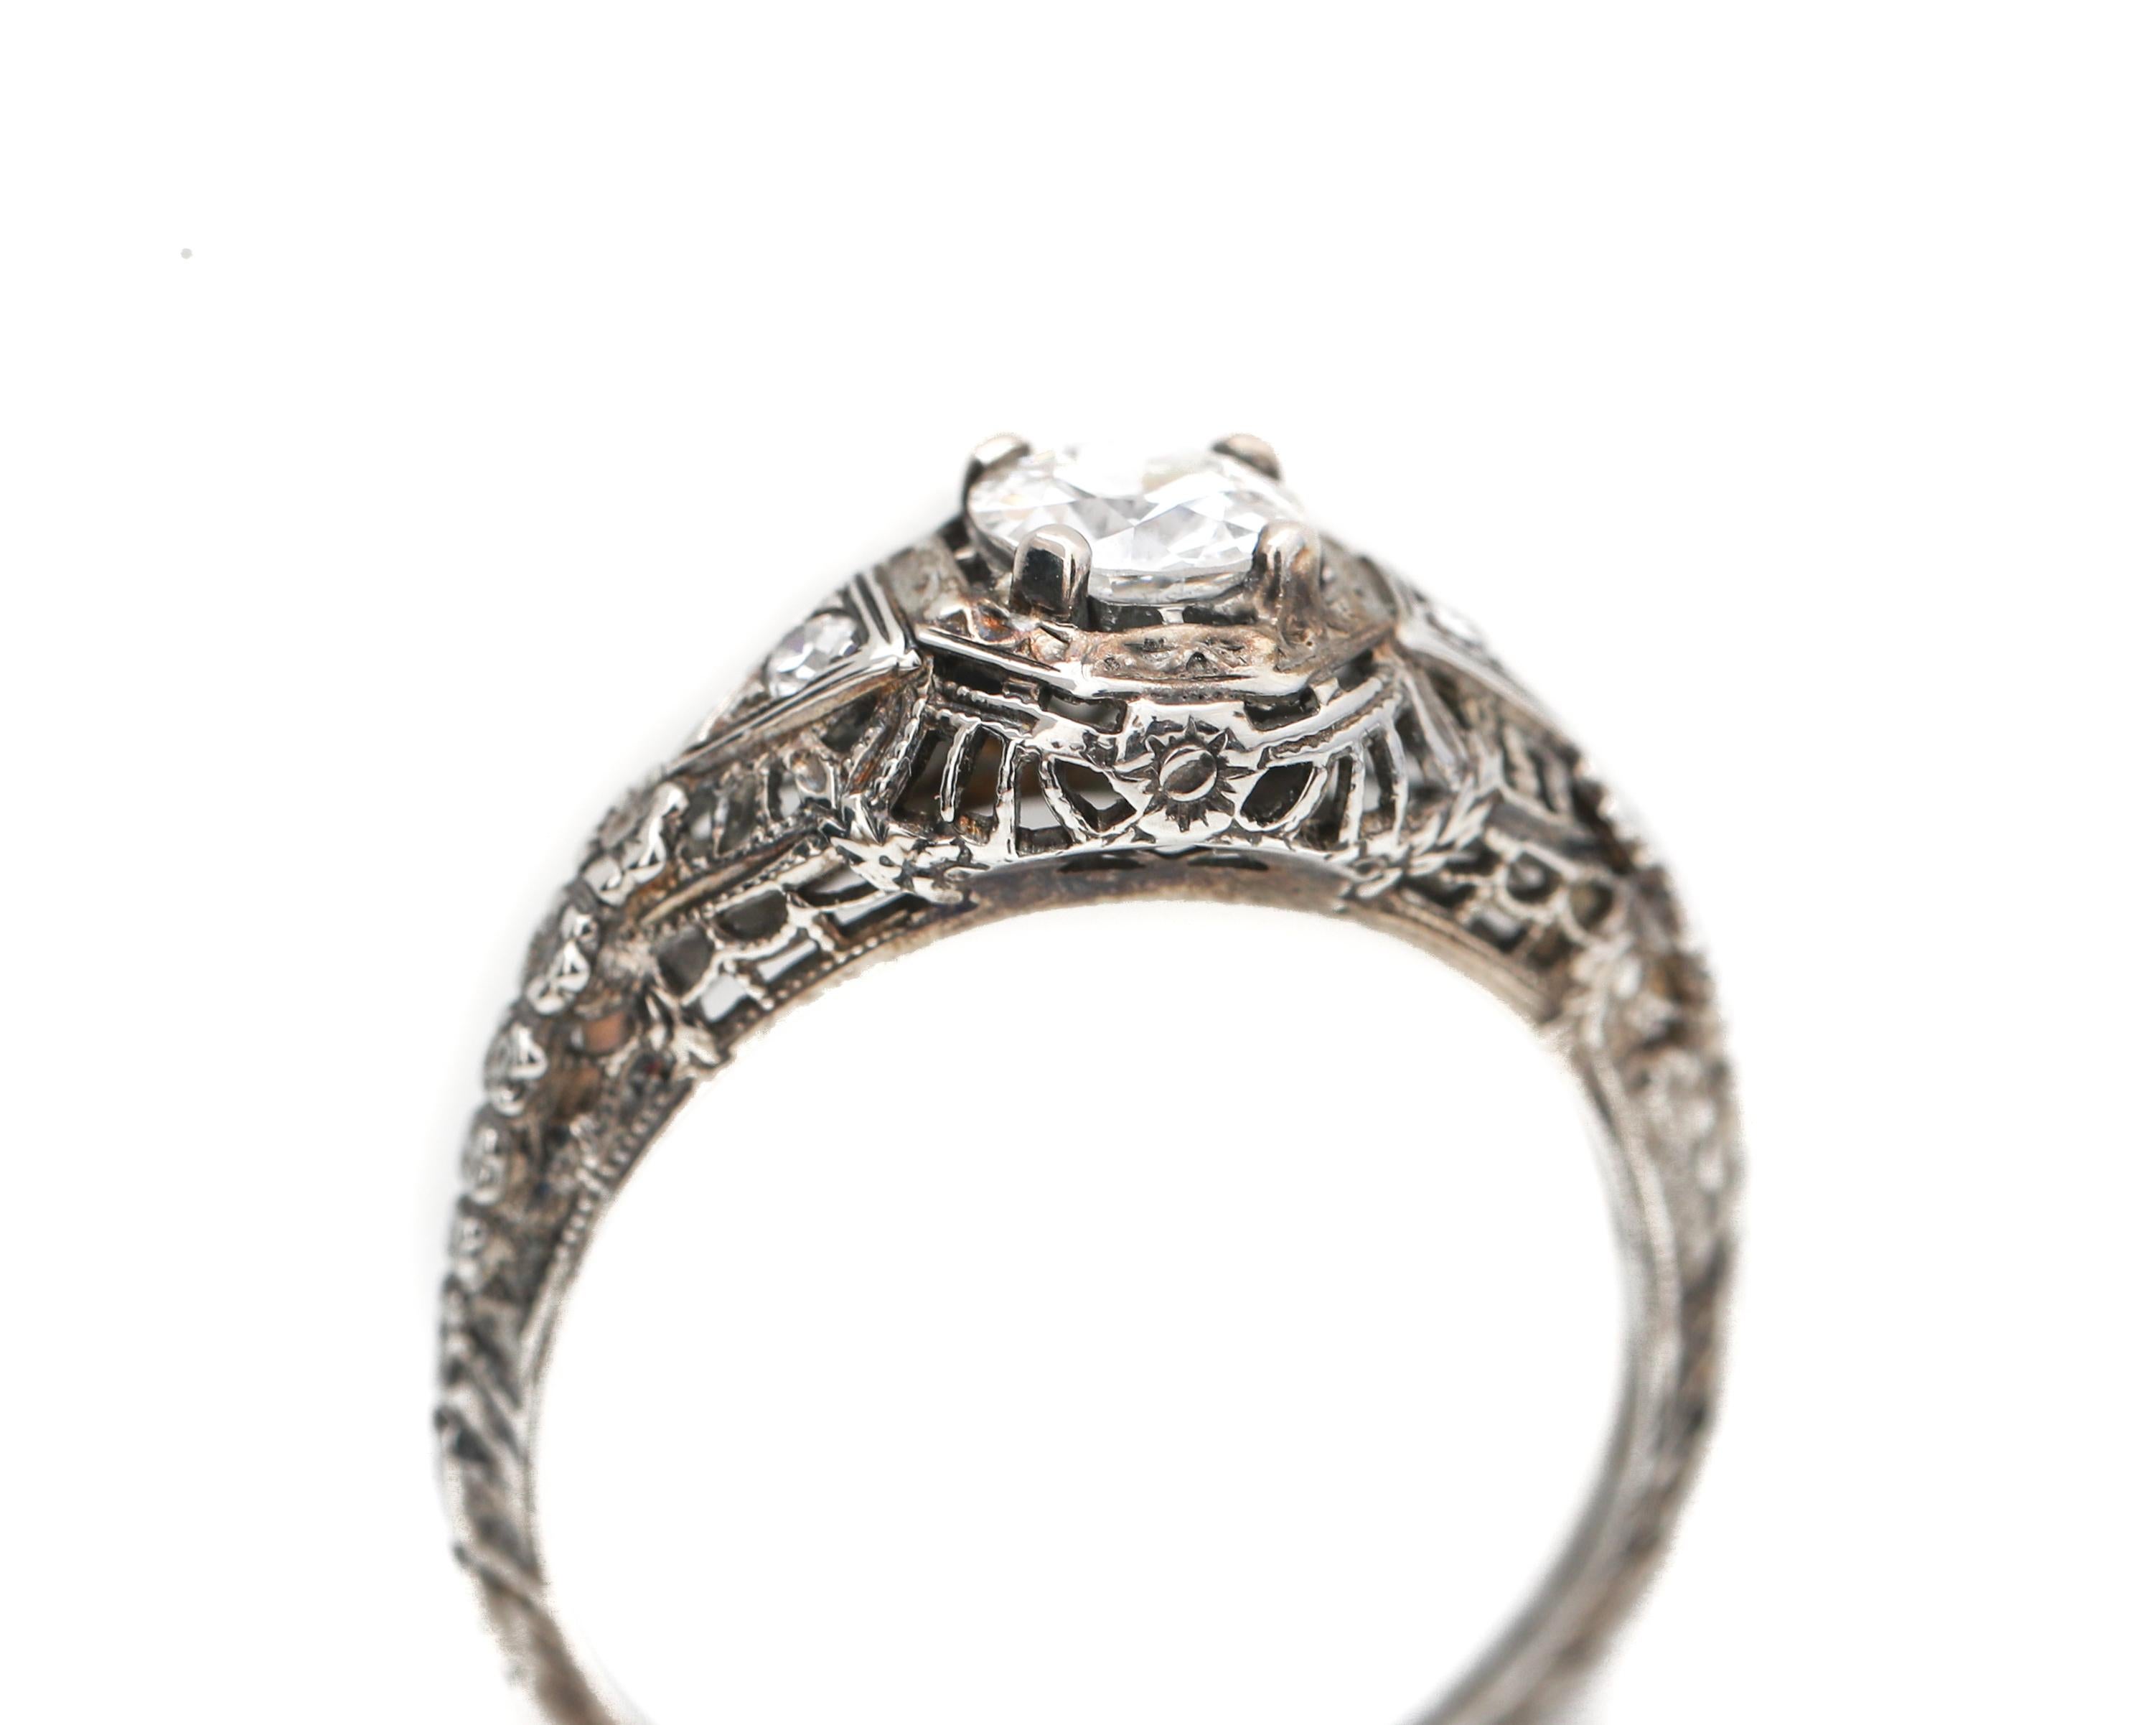 Late Victorian Victorian Filigree .60 Carat Diamond White Gold Engagement Ring, circa 1890s